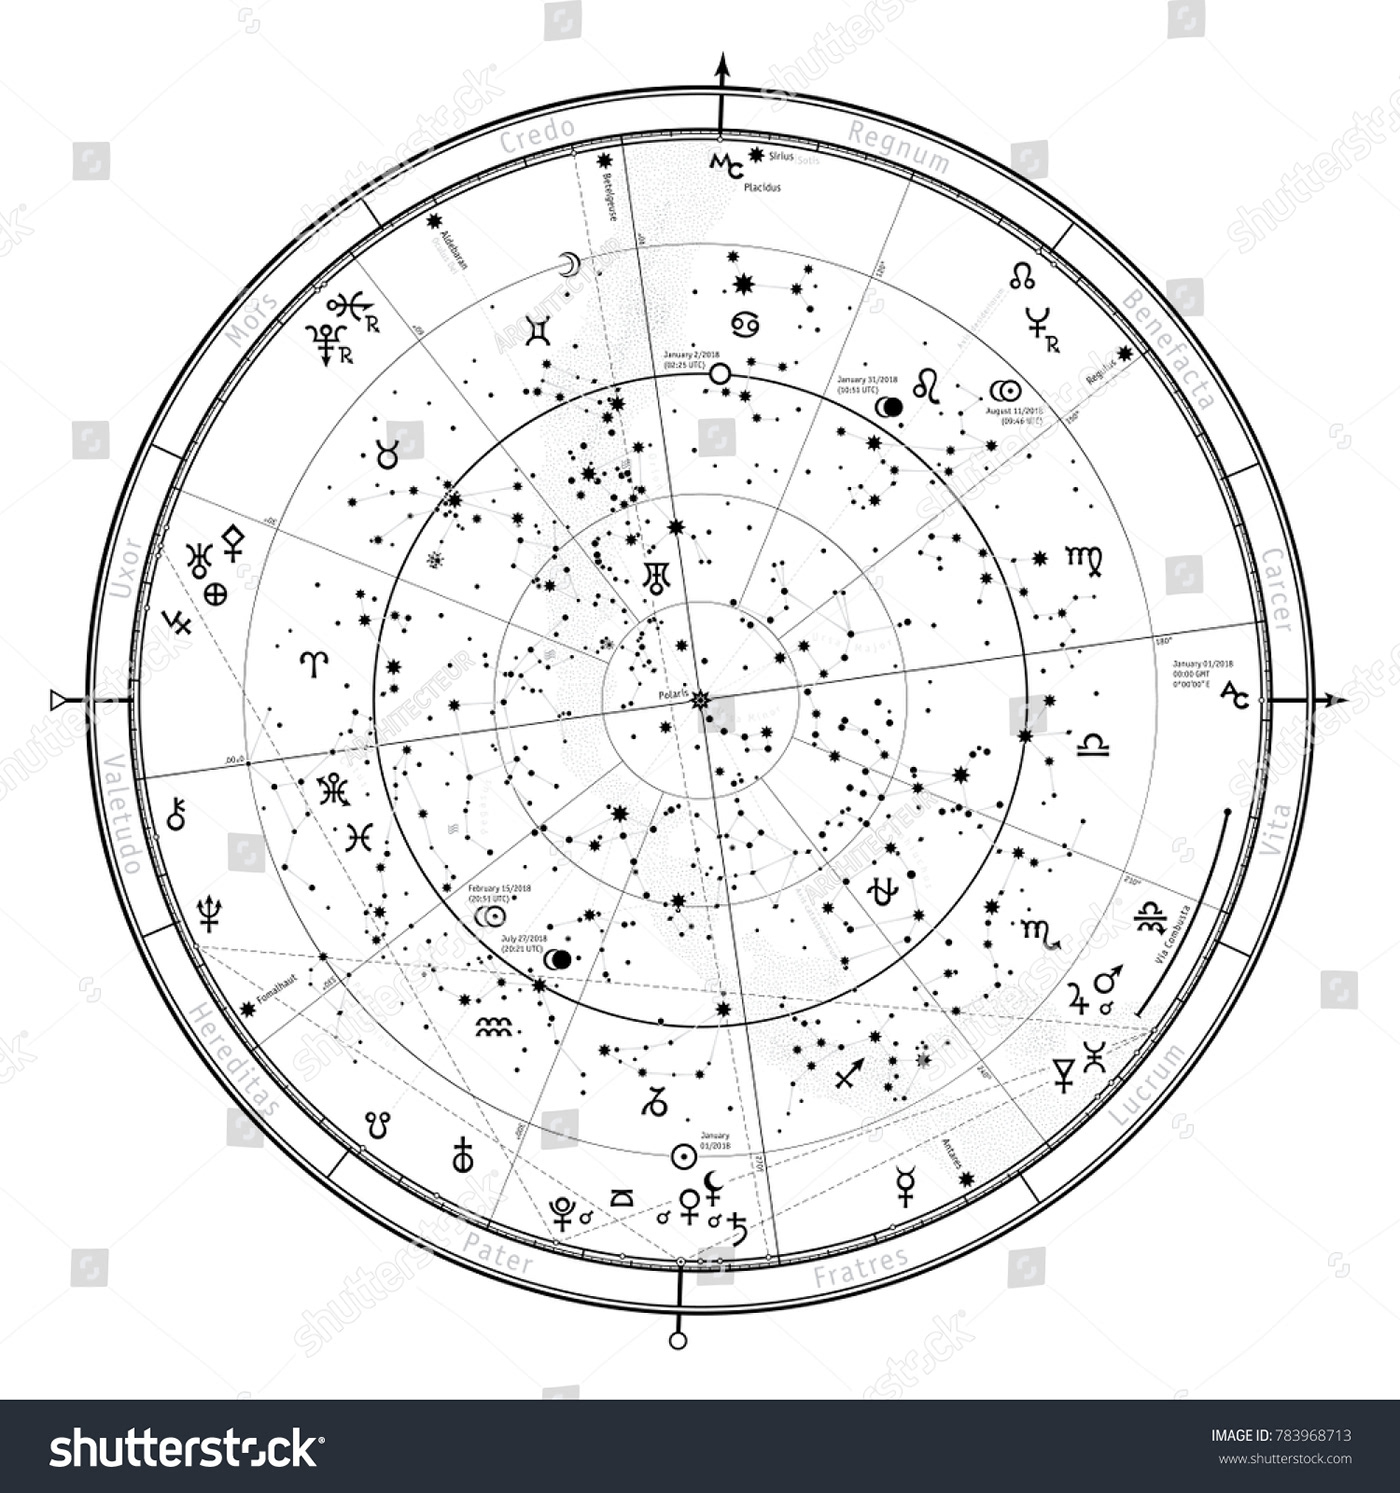 celestial Horoscope zodiac constellation moon Astrology astronomy Northern Hemisphere universe stars